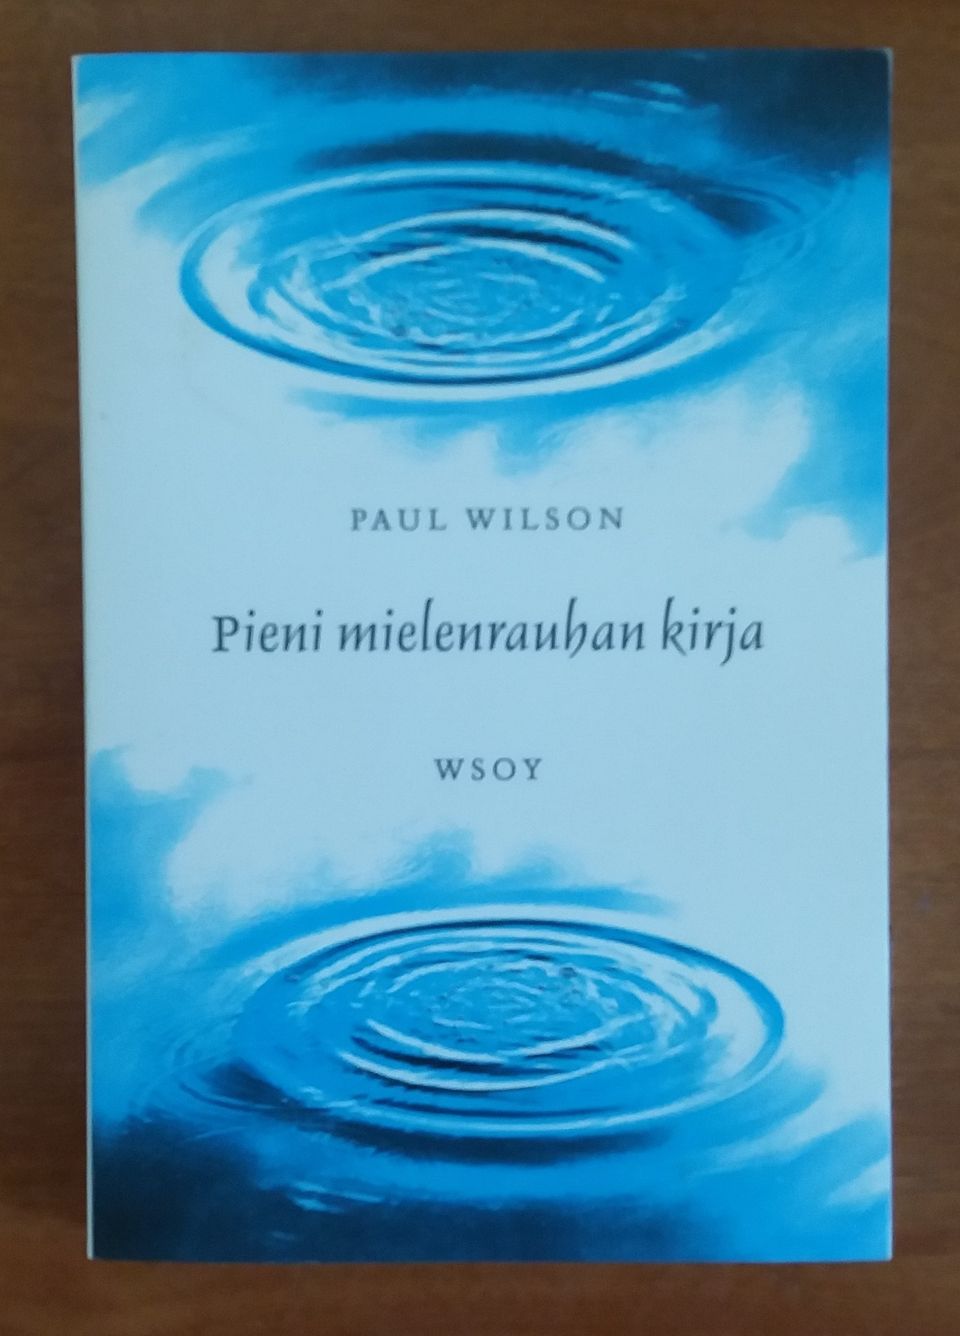 Paul Wilson PIENI MIELENRAUHAN KIRJA Wsoy 1999